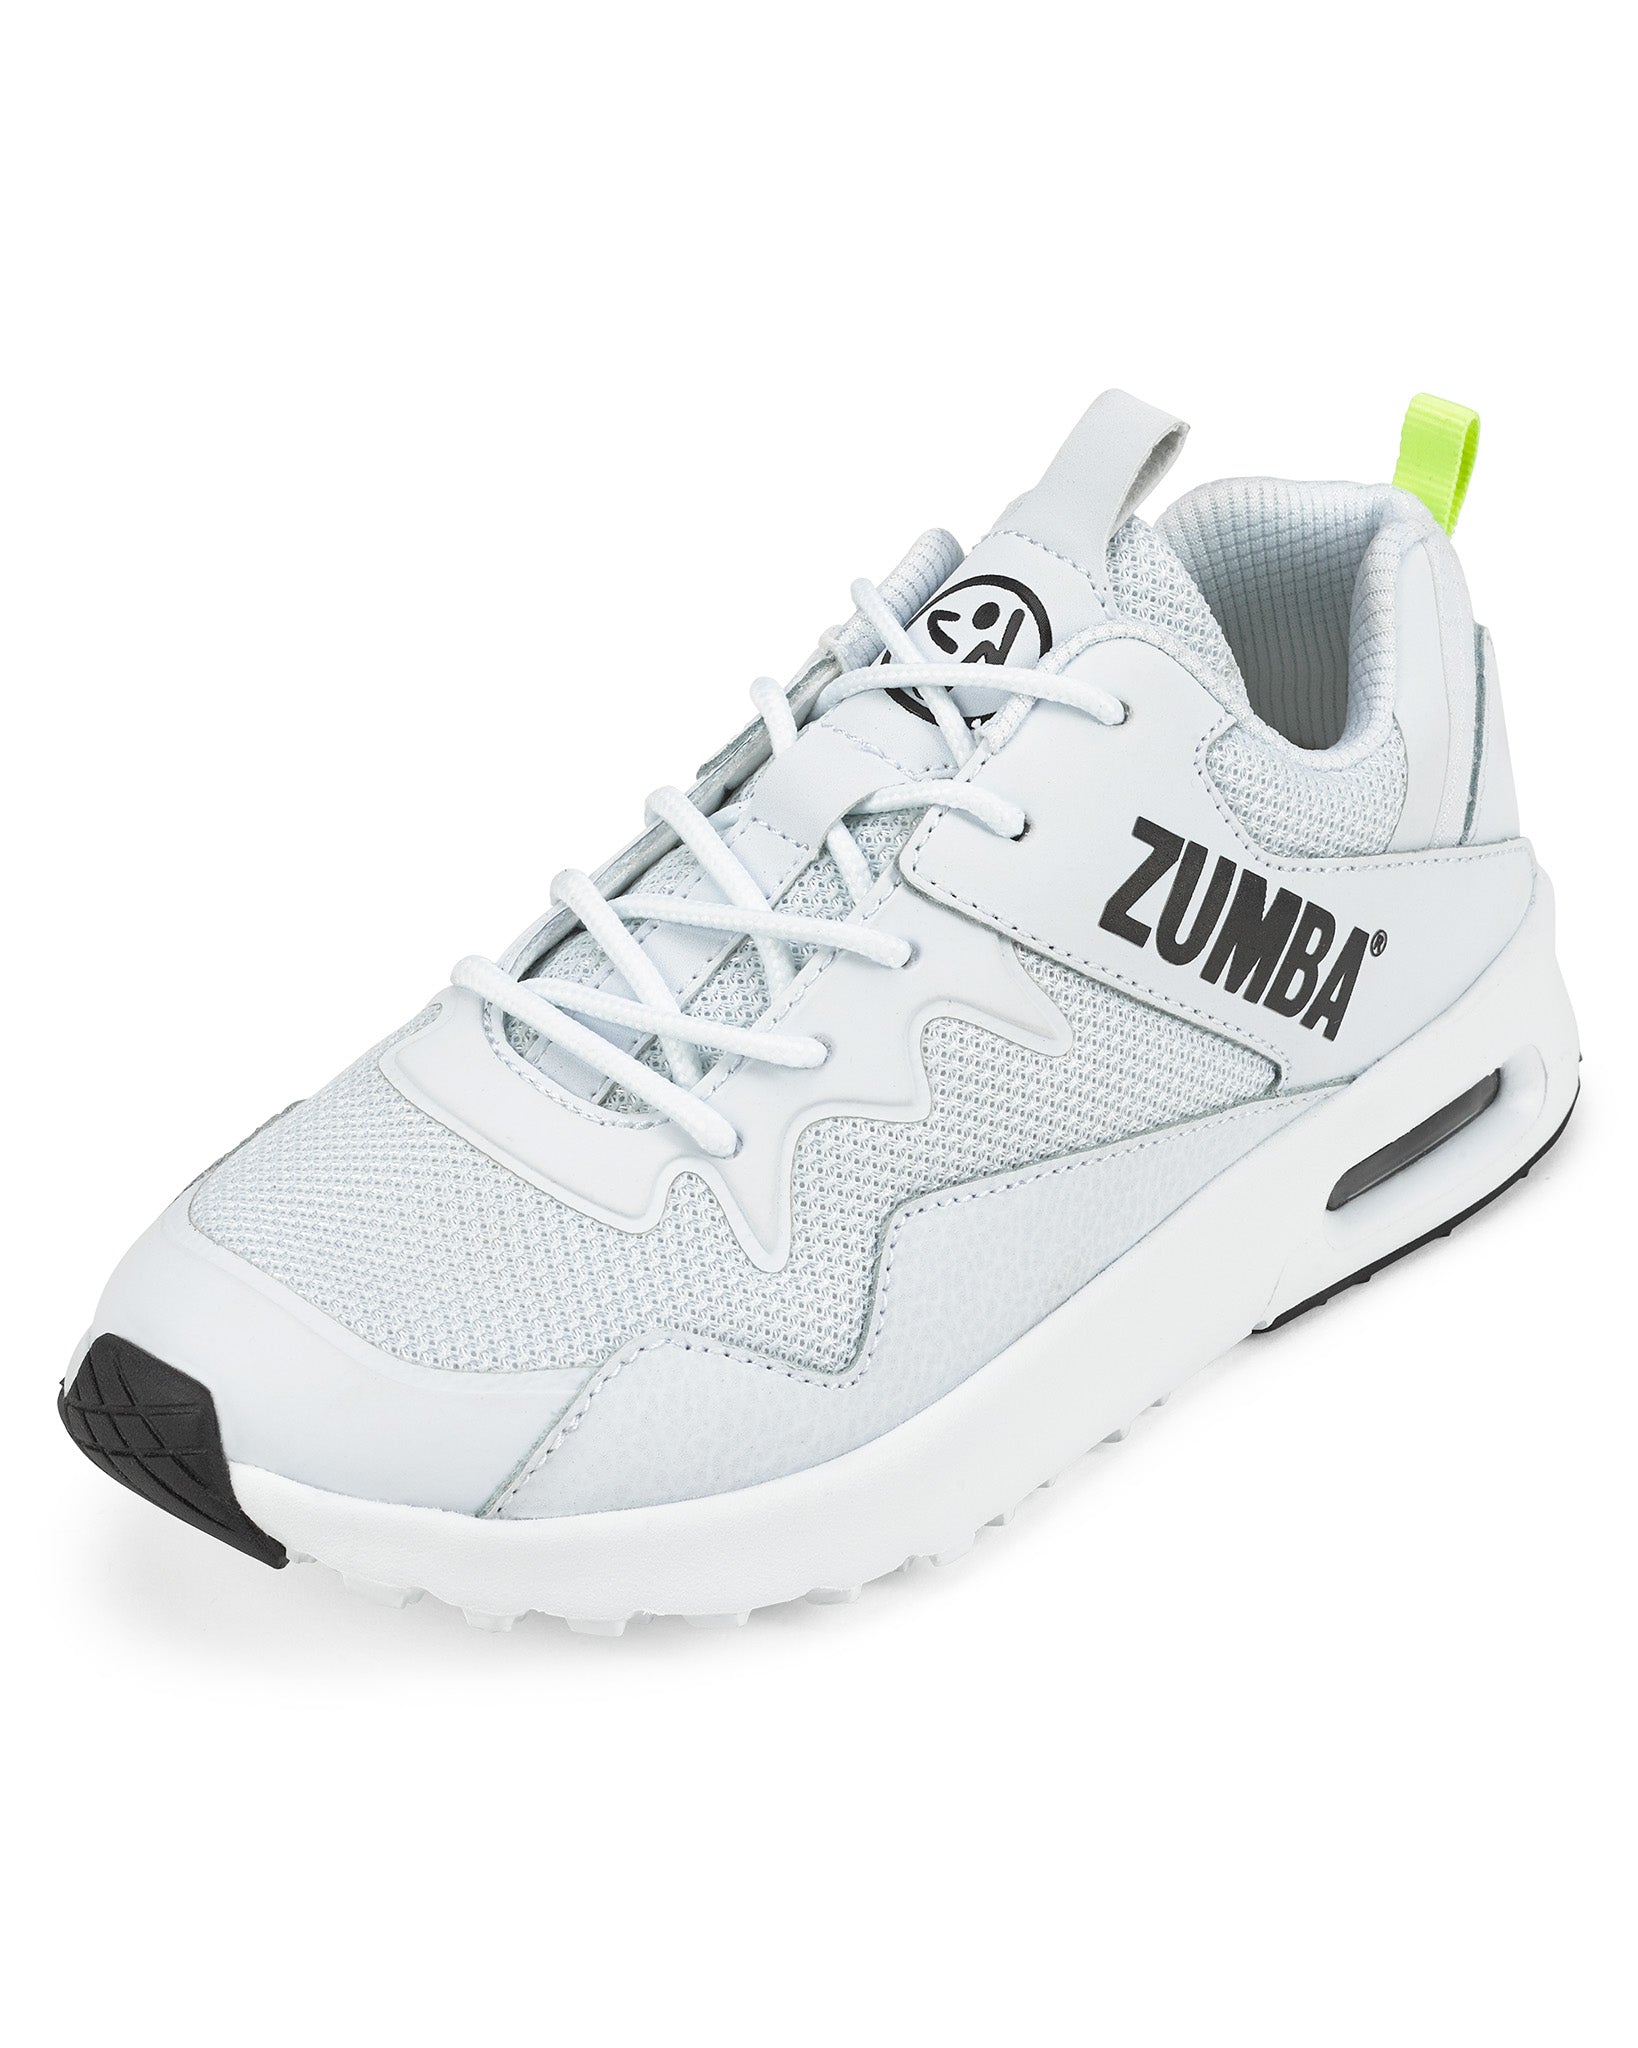 Zumba Fitness Air Classic Fashion Dance Workout Shoes, Zapatillas